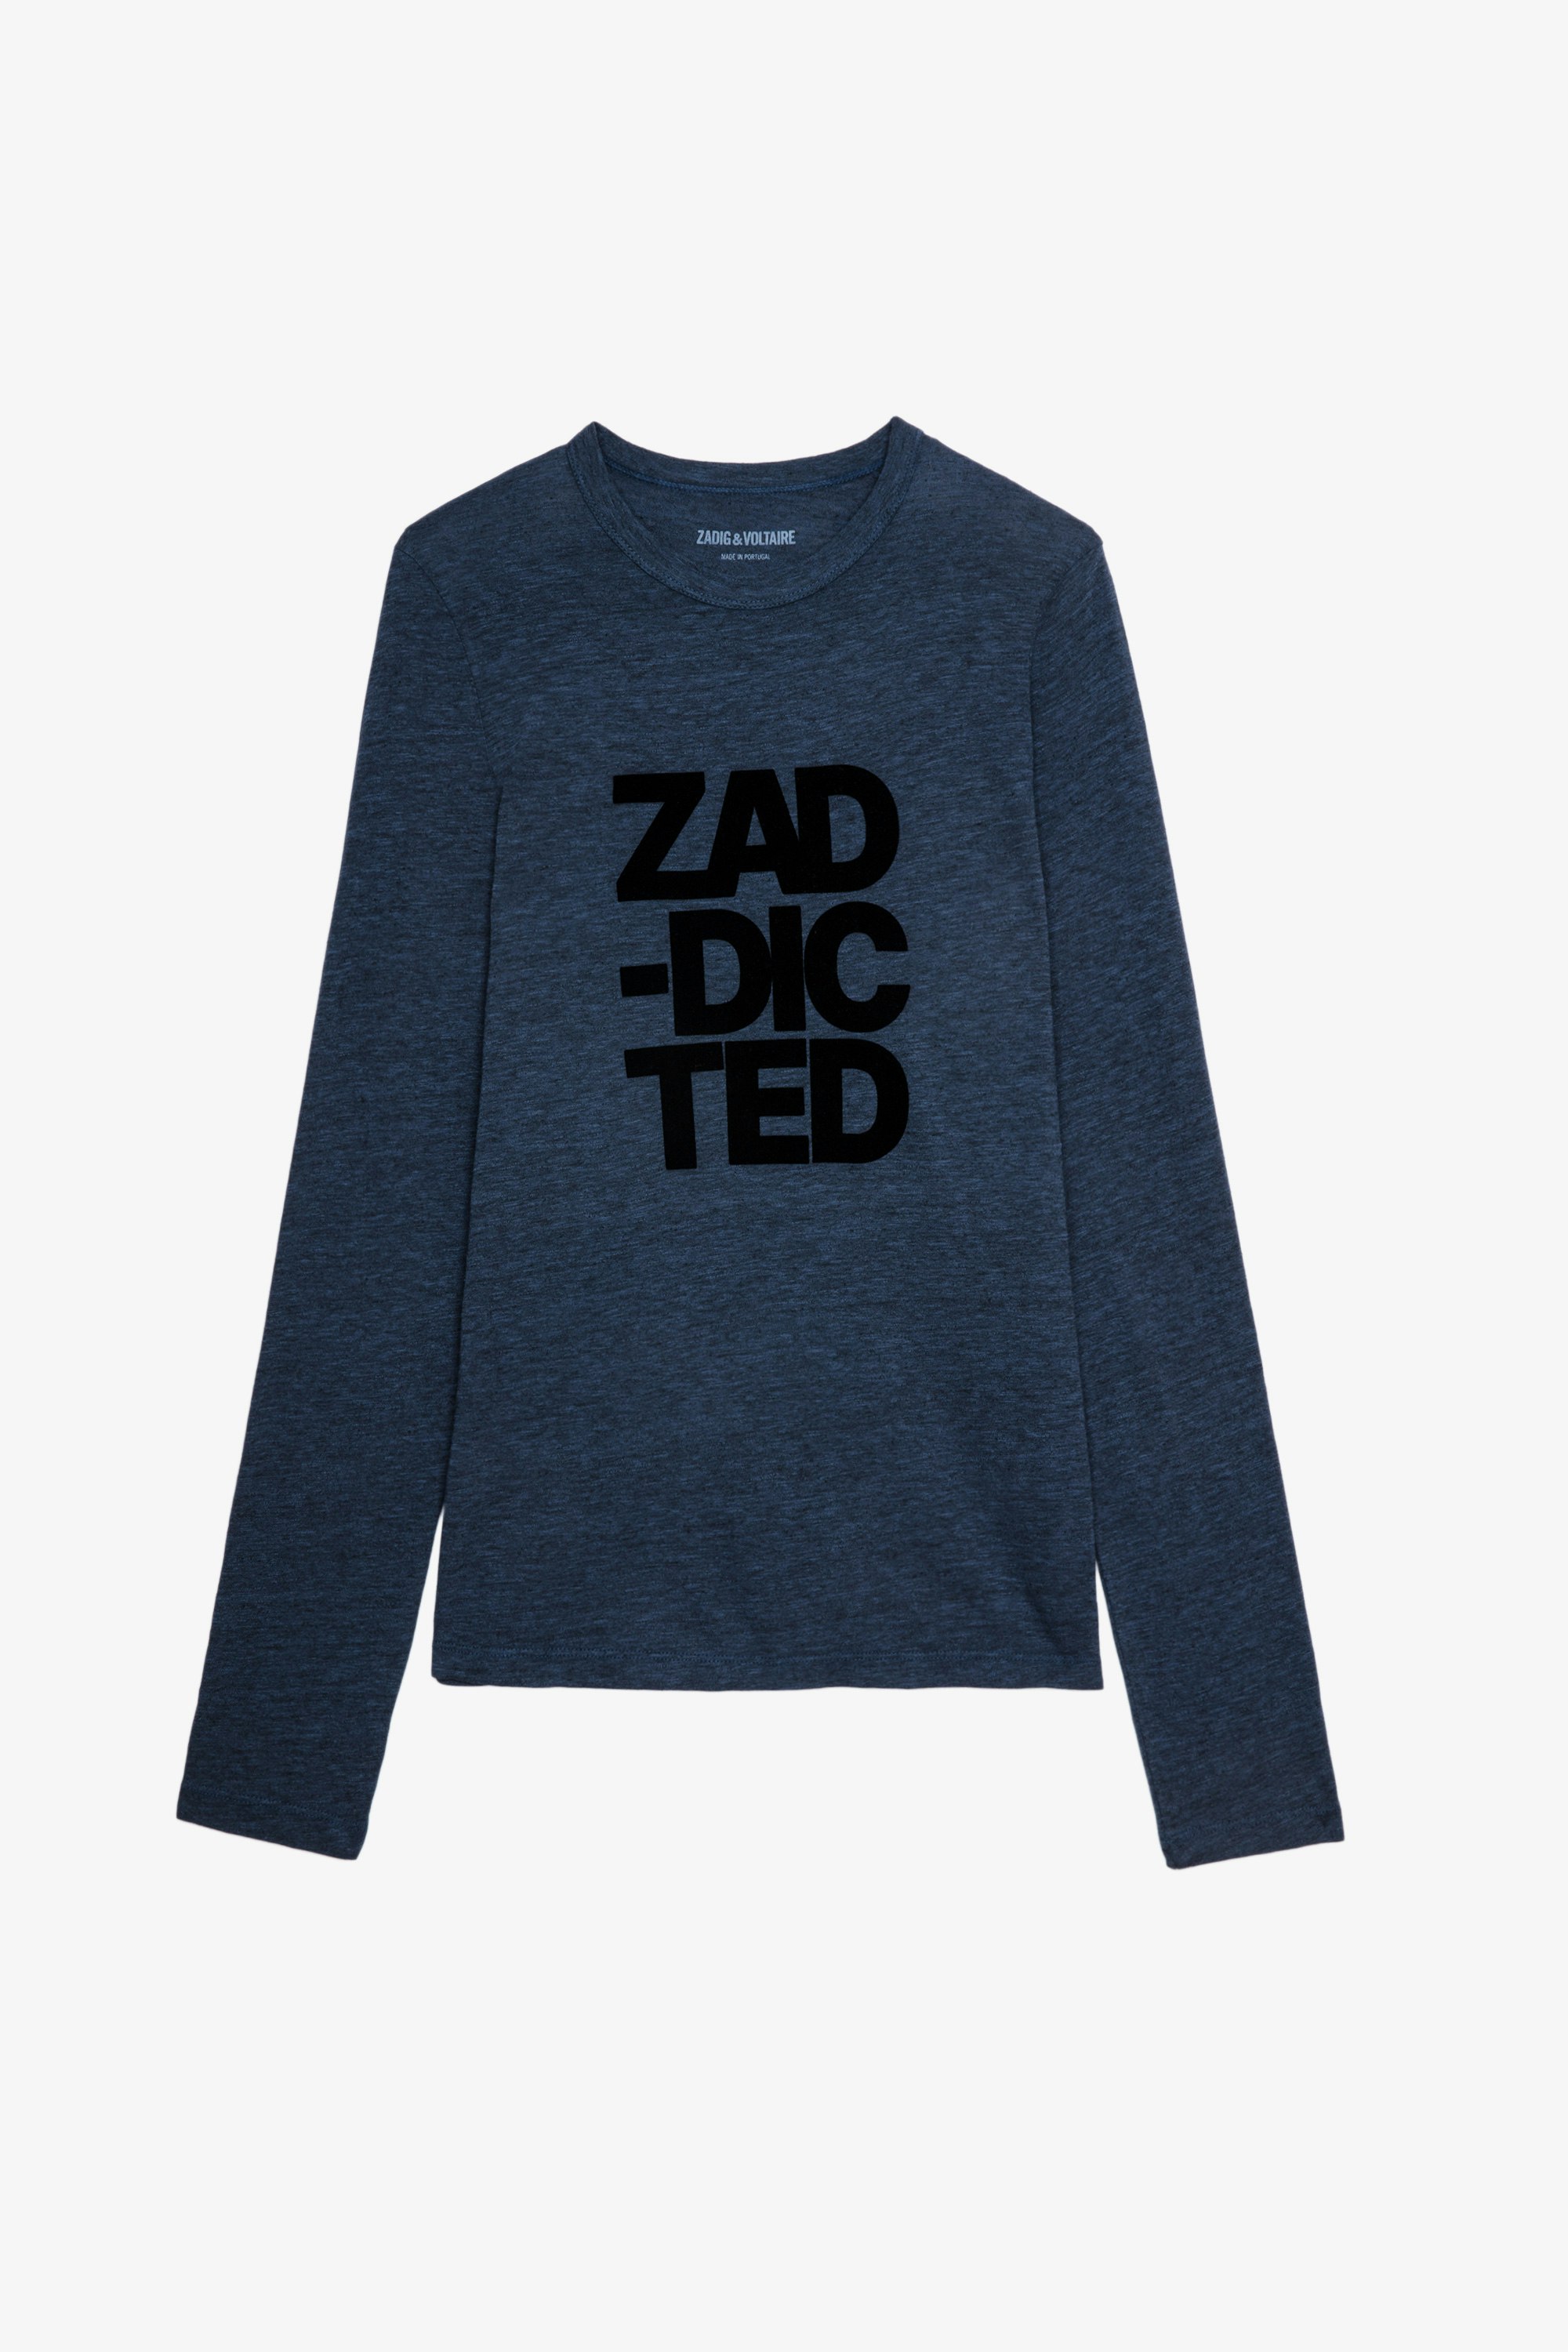 T-shirt Willy Zaddicted T-shirt bleu à application zaddicted femme